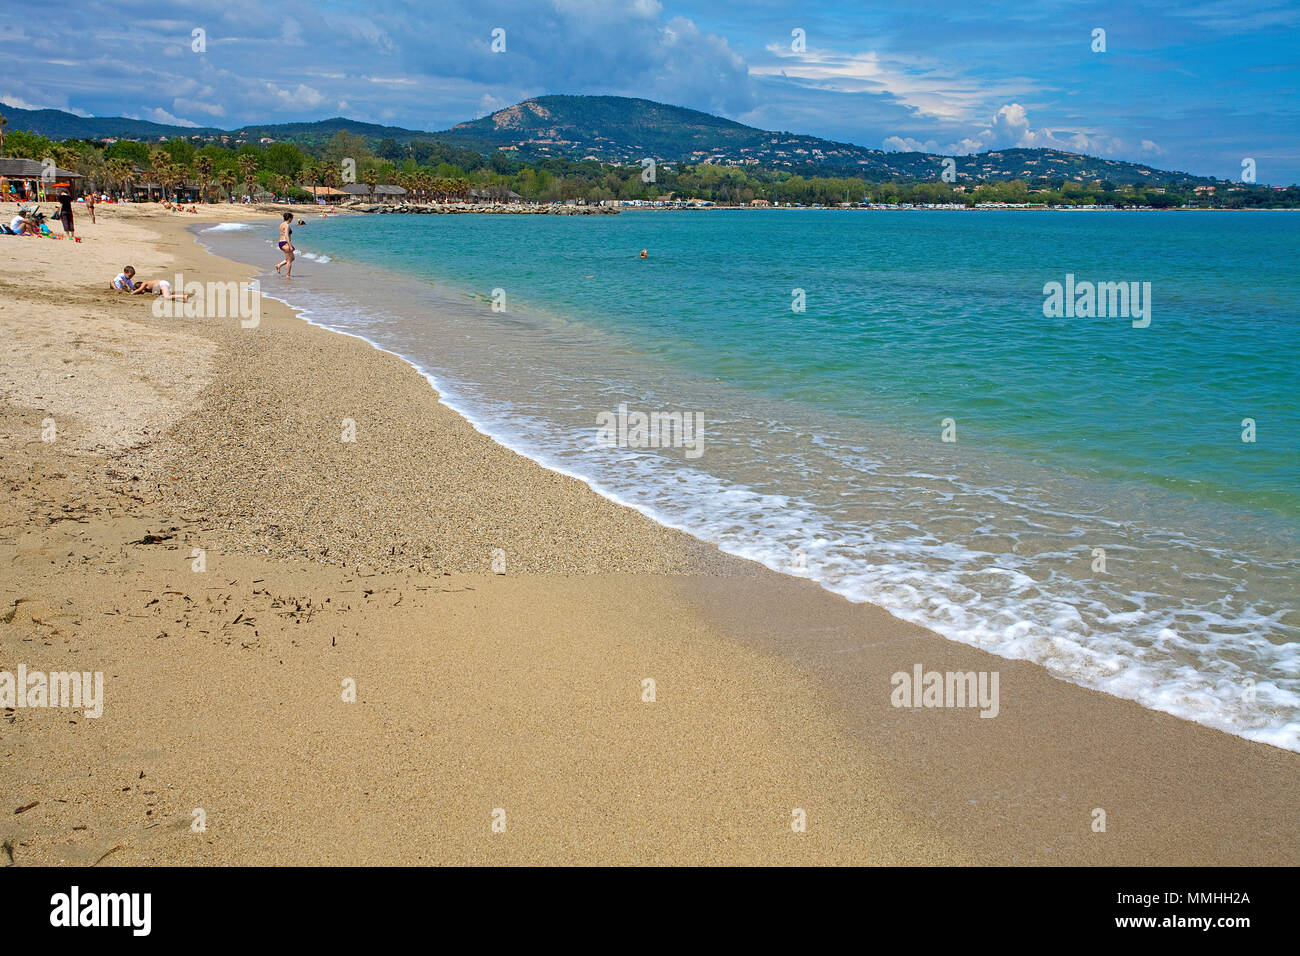 Playa de Port Grimaud, Golfo de Saint-Tropez, Cote d'Azur, en el sur de Francia, Francia, Europa Foto de stock